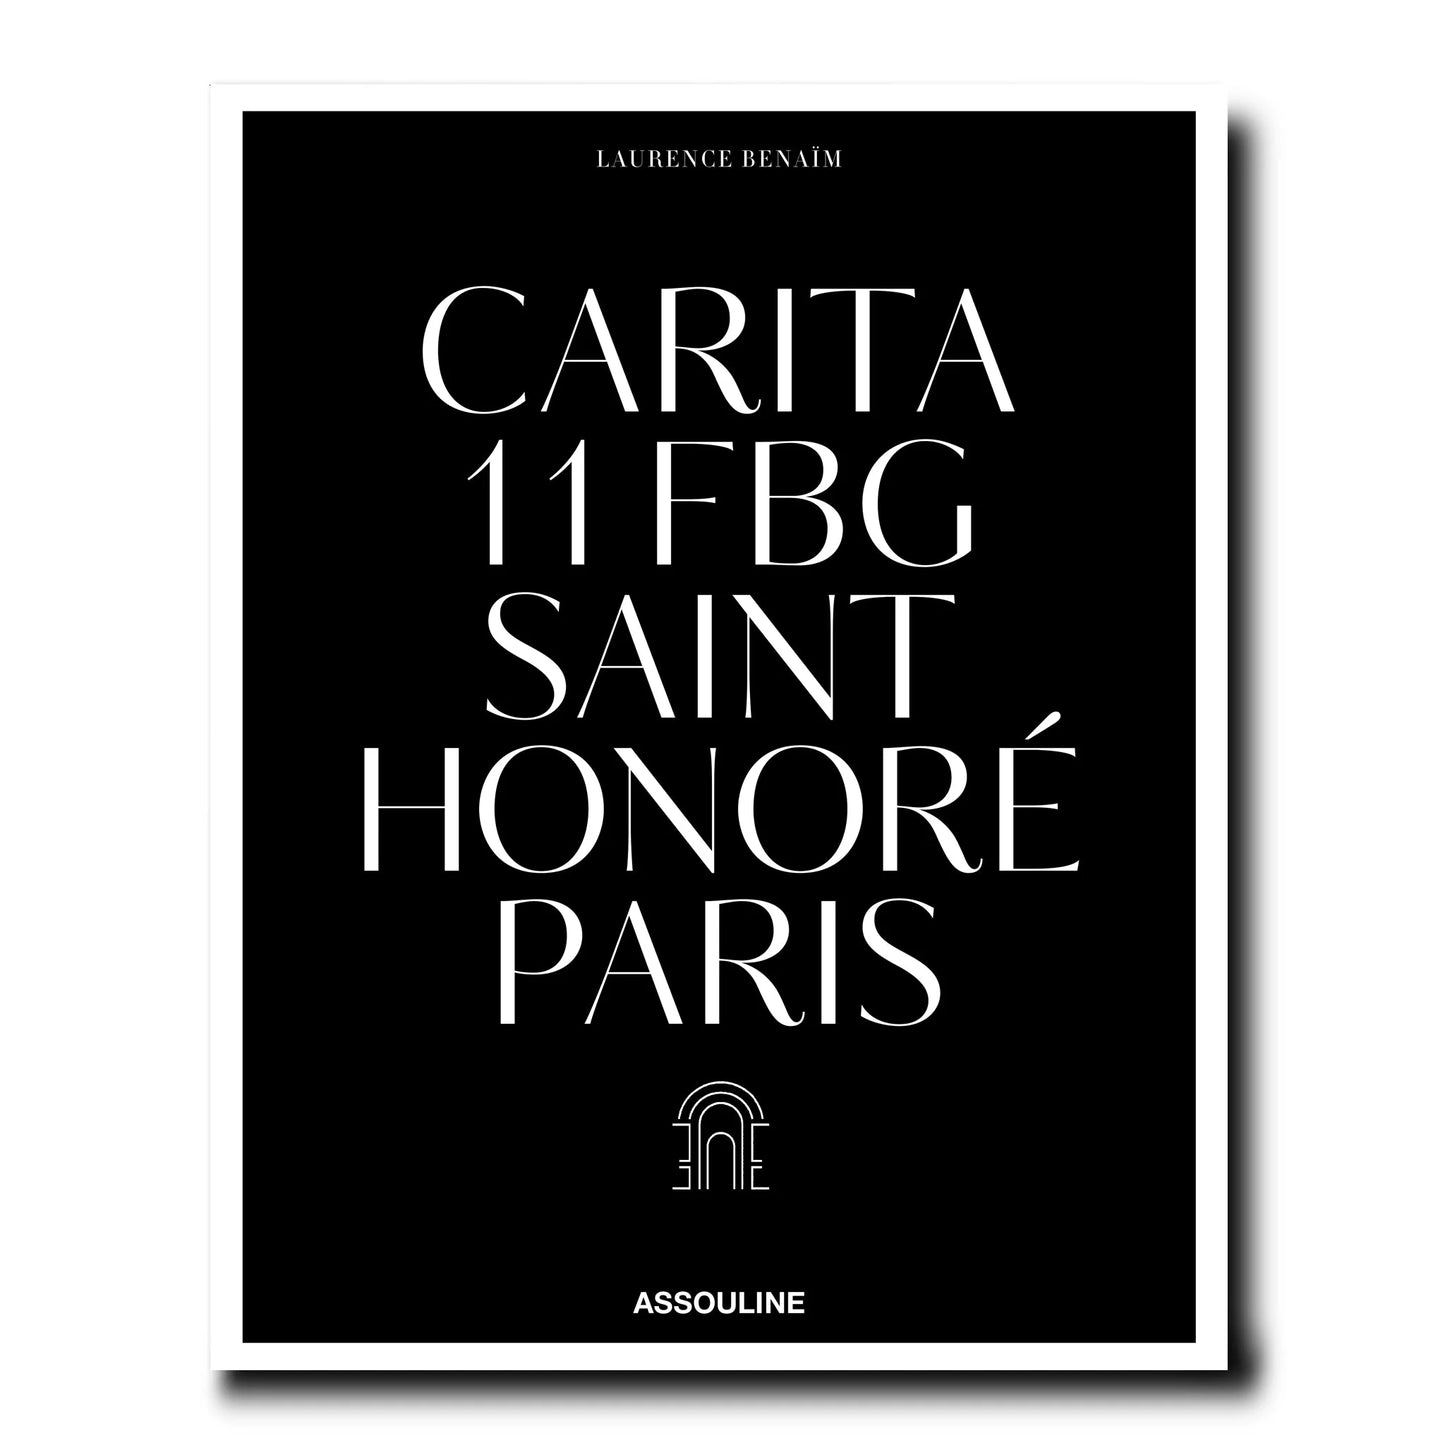 Carita: 11 FBG Saint Honore Paris Book